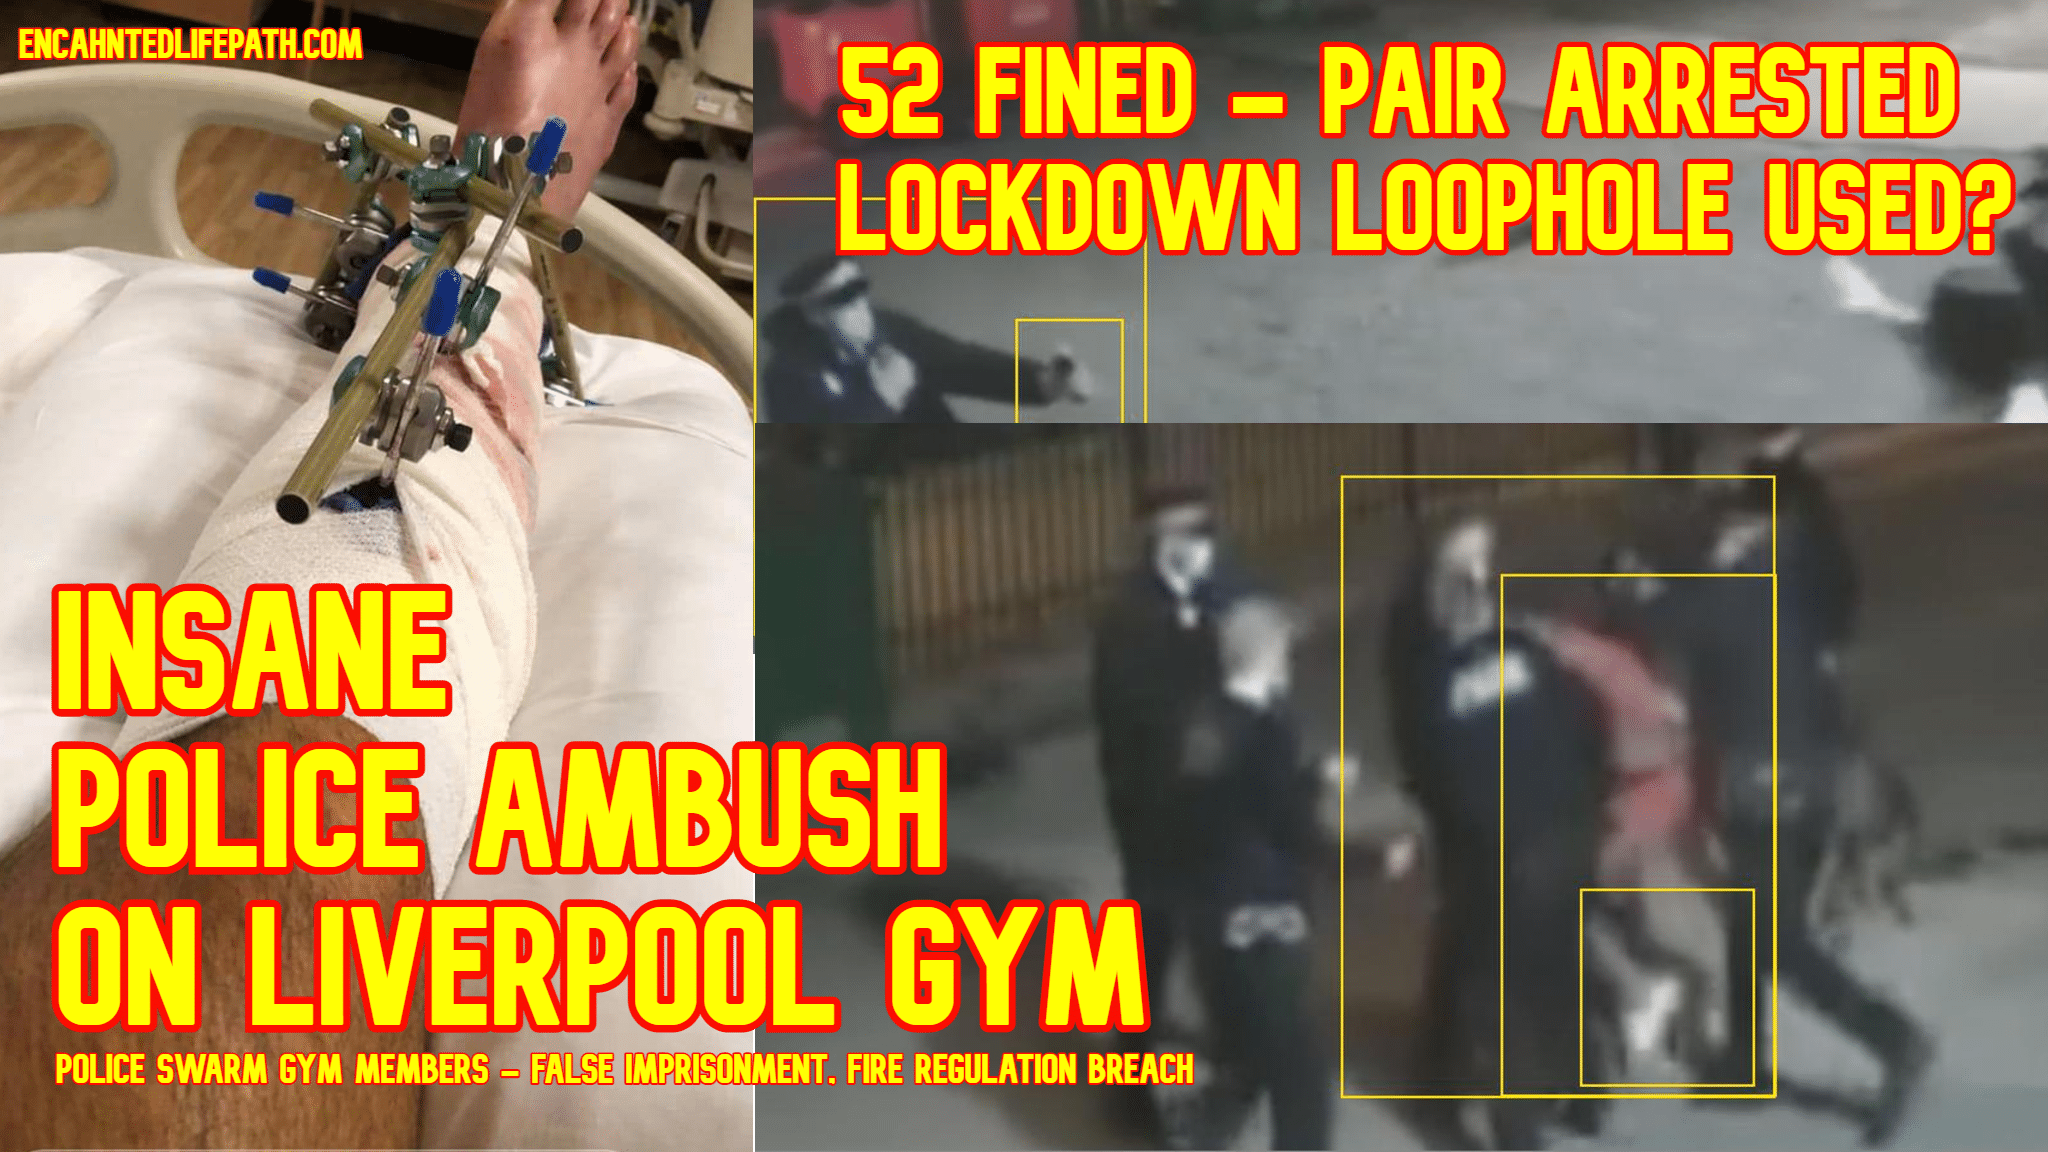 Liverpool gym arrests Insane Police Ambush On Liverpool Gym - 52 Fined - 2 Arrests - Police Brutality - False Imprisonment - Breach Of Fire Regulations